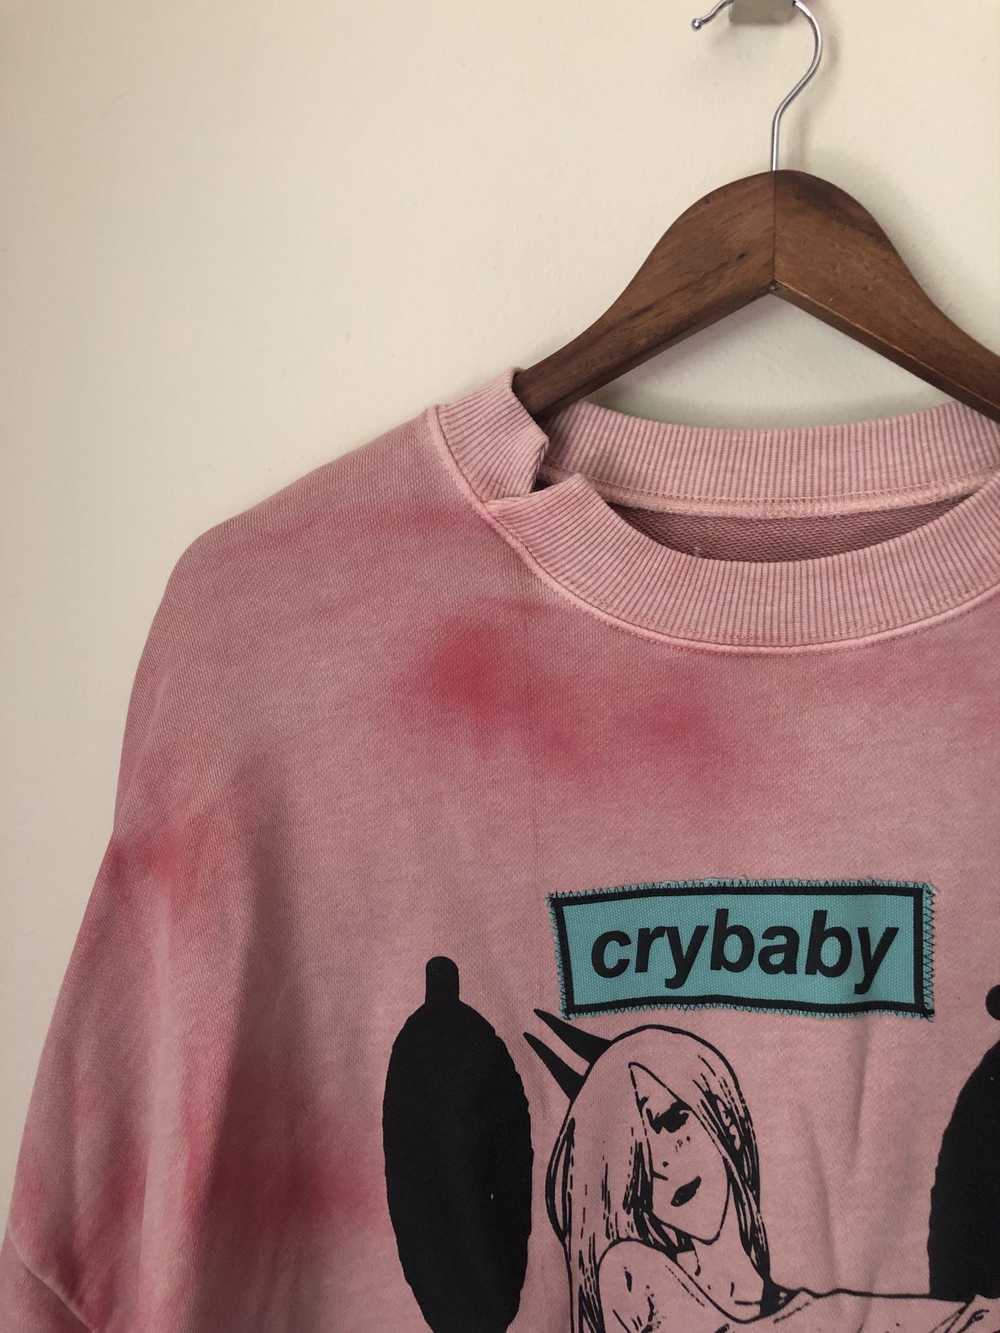 Custom Problem6oy “Crybaby” Pink Sweater - image 5